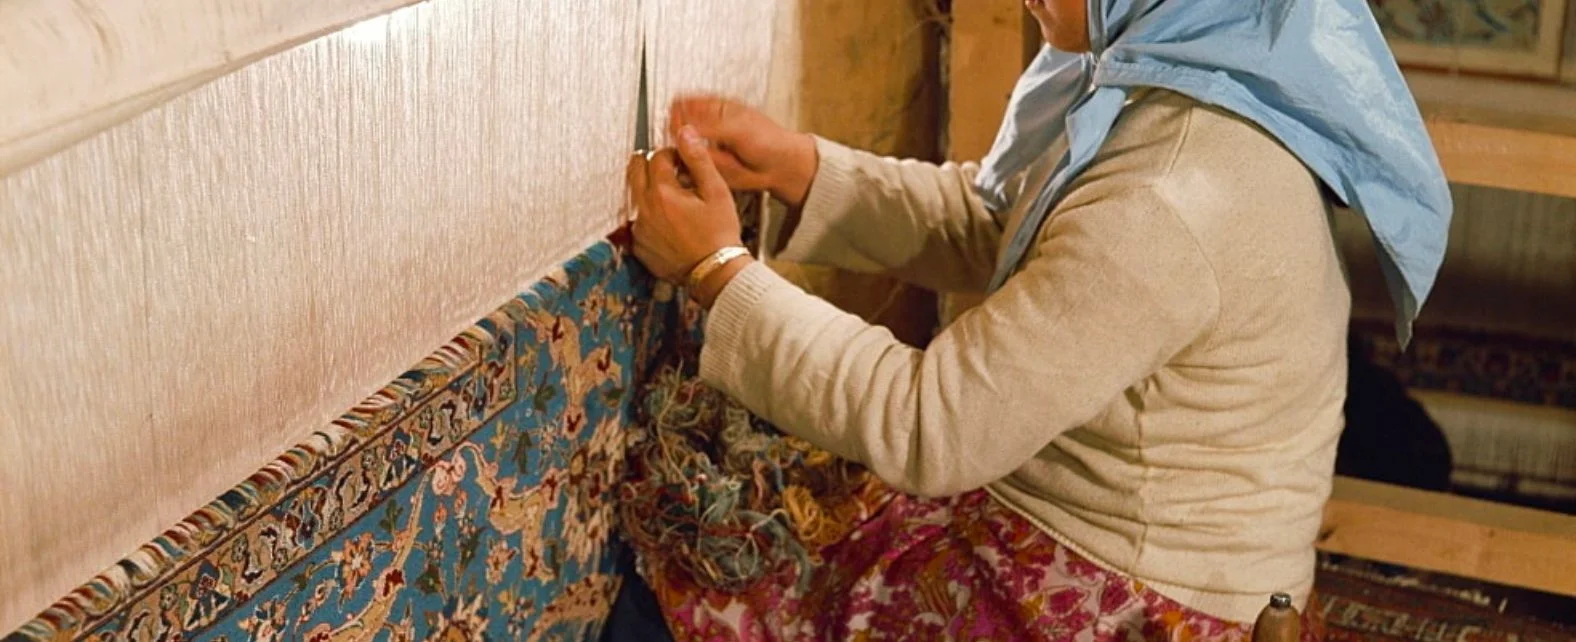 Tissage artisanal d’un tapis